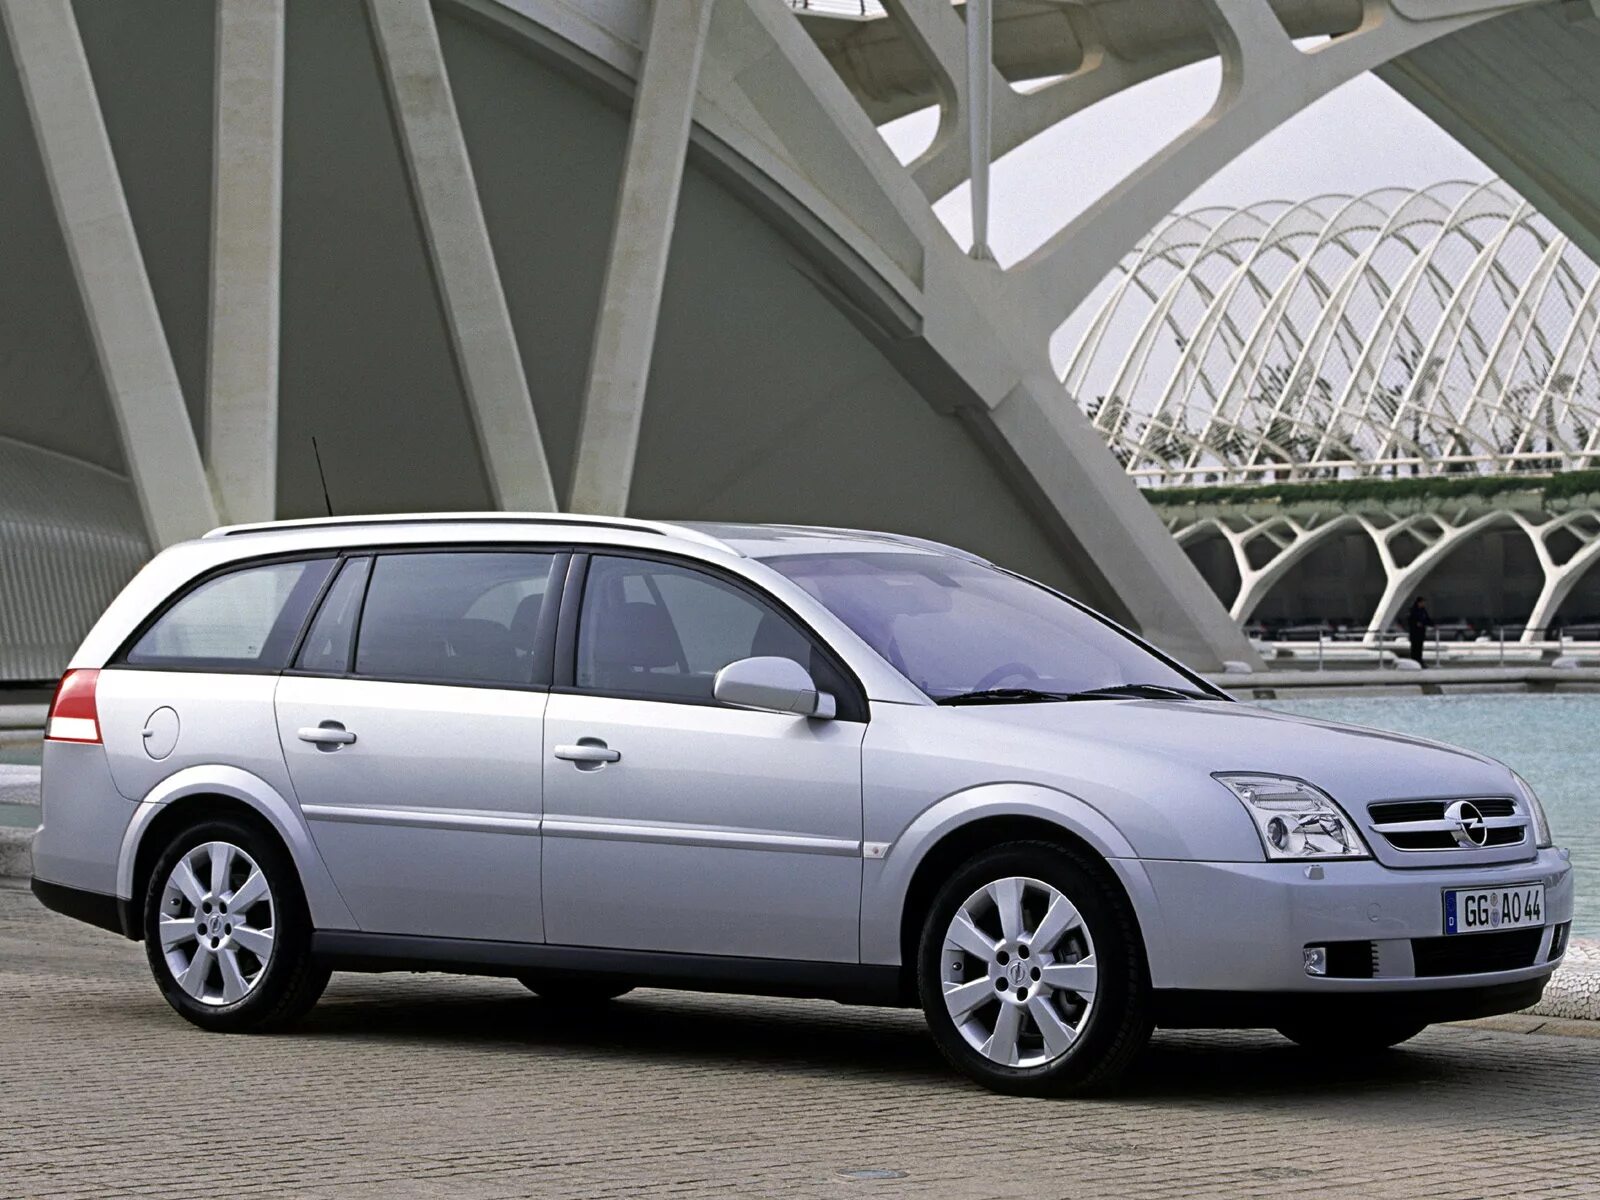 Опель Вектра 2004 универсал. Opel Vectra c 2003 универсал. Opel Vectra c 2004 универсал. Опель Вектра с 2005 универсал.